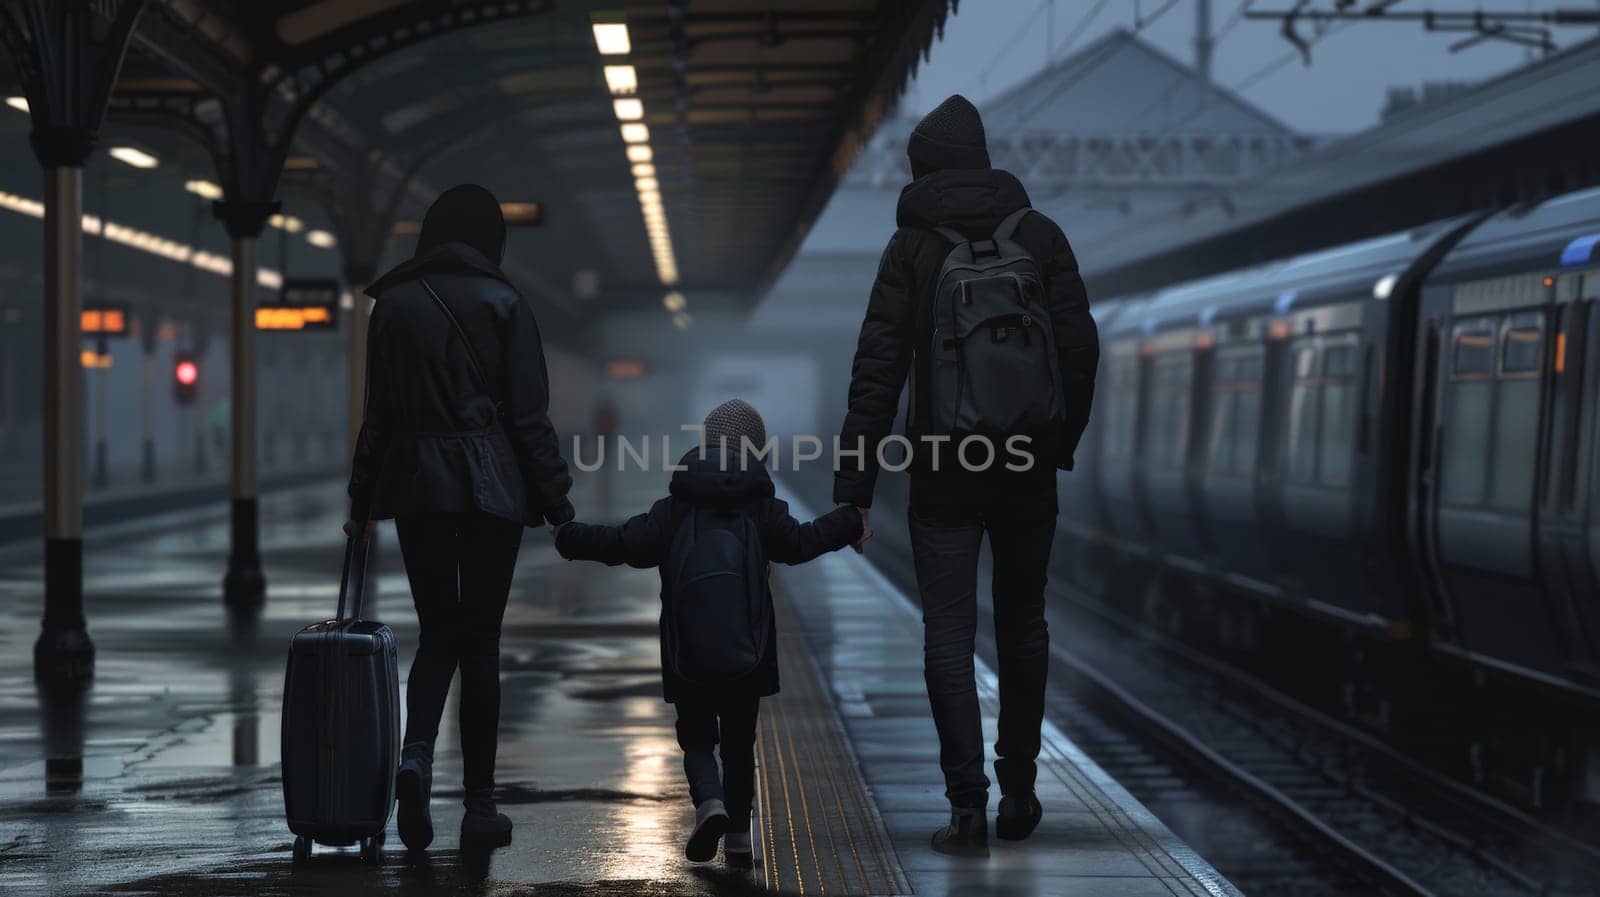 Family on platform of railway train station, Family vacation, Family travel trip.